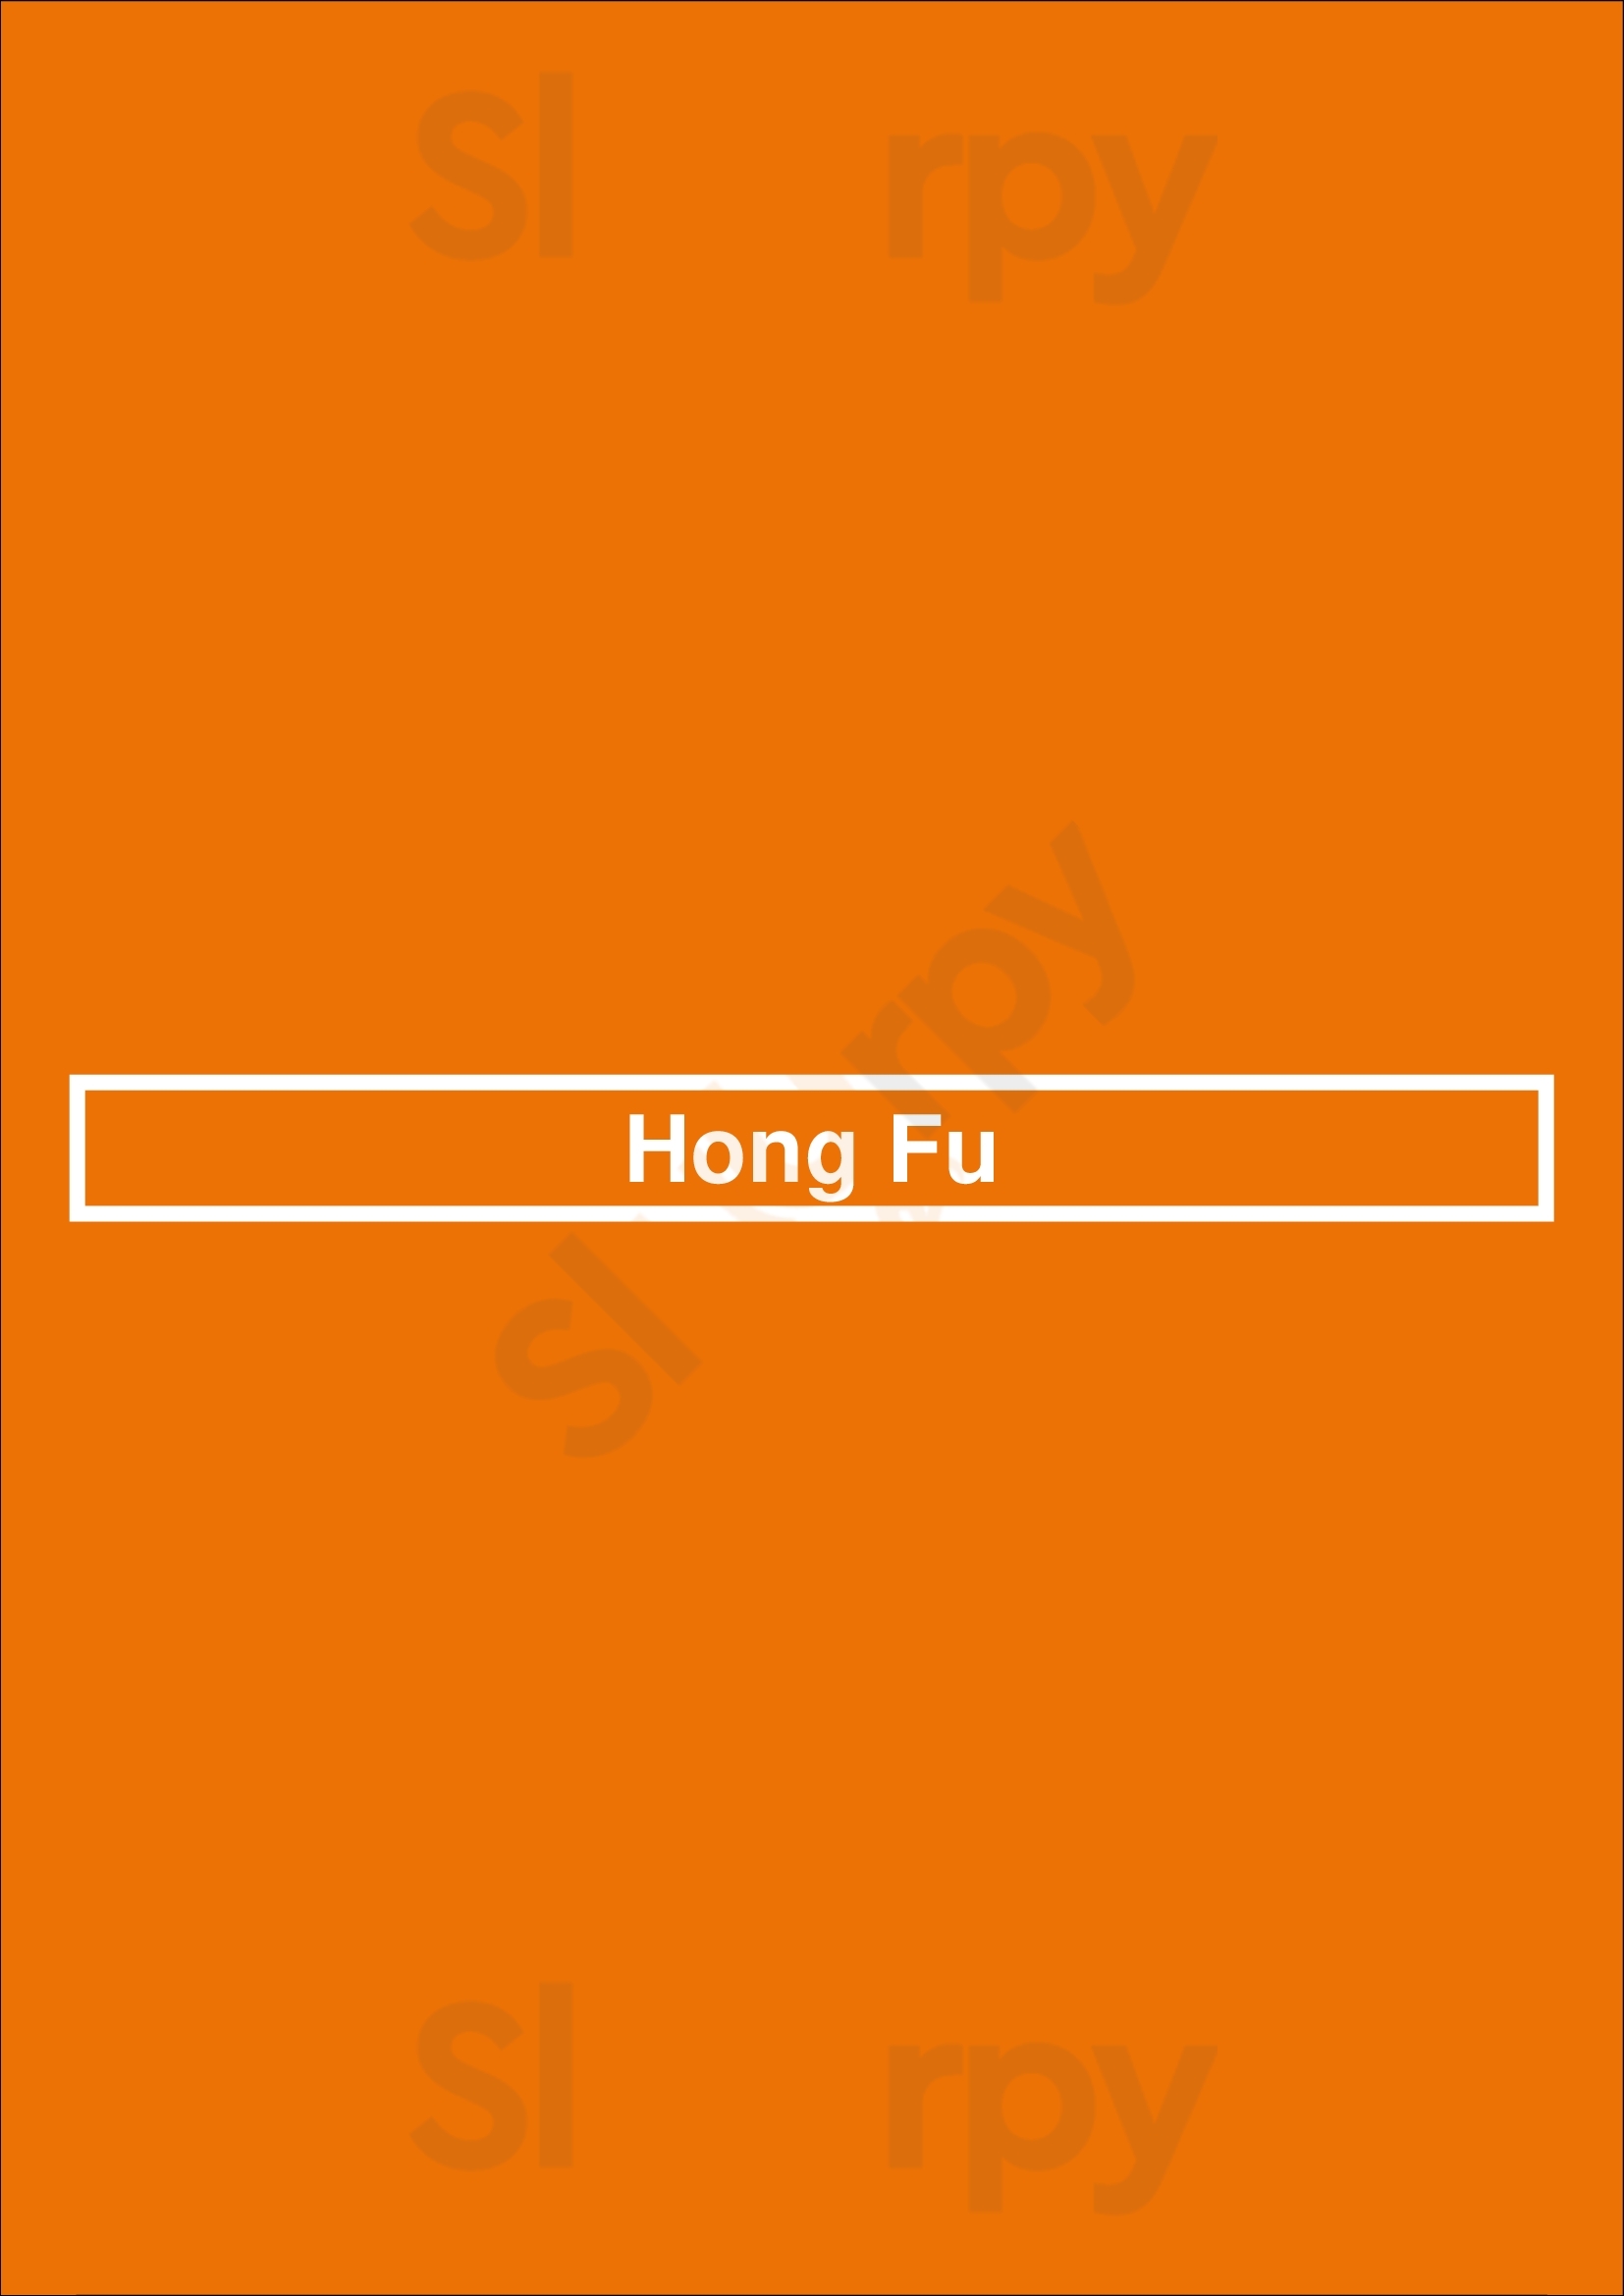 Hong Fu Orlando Menu - 1